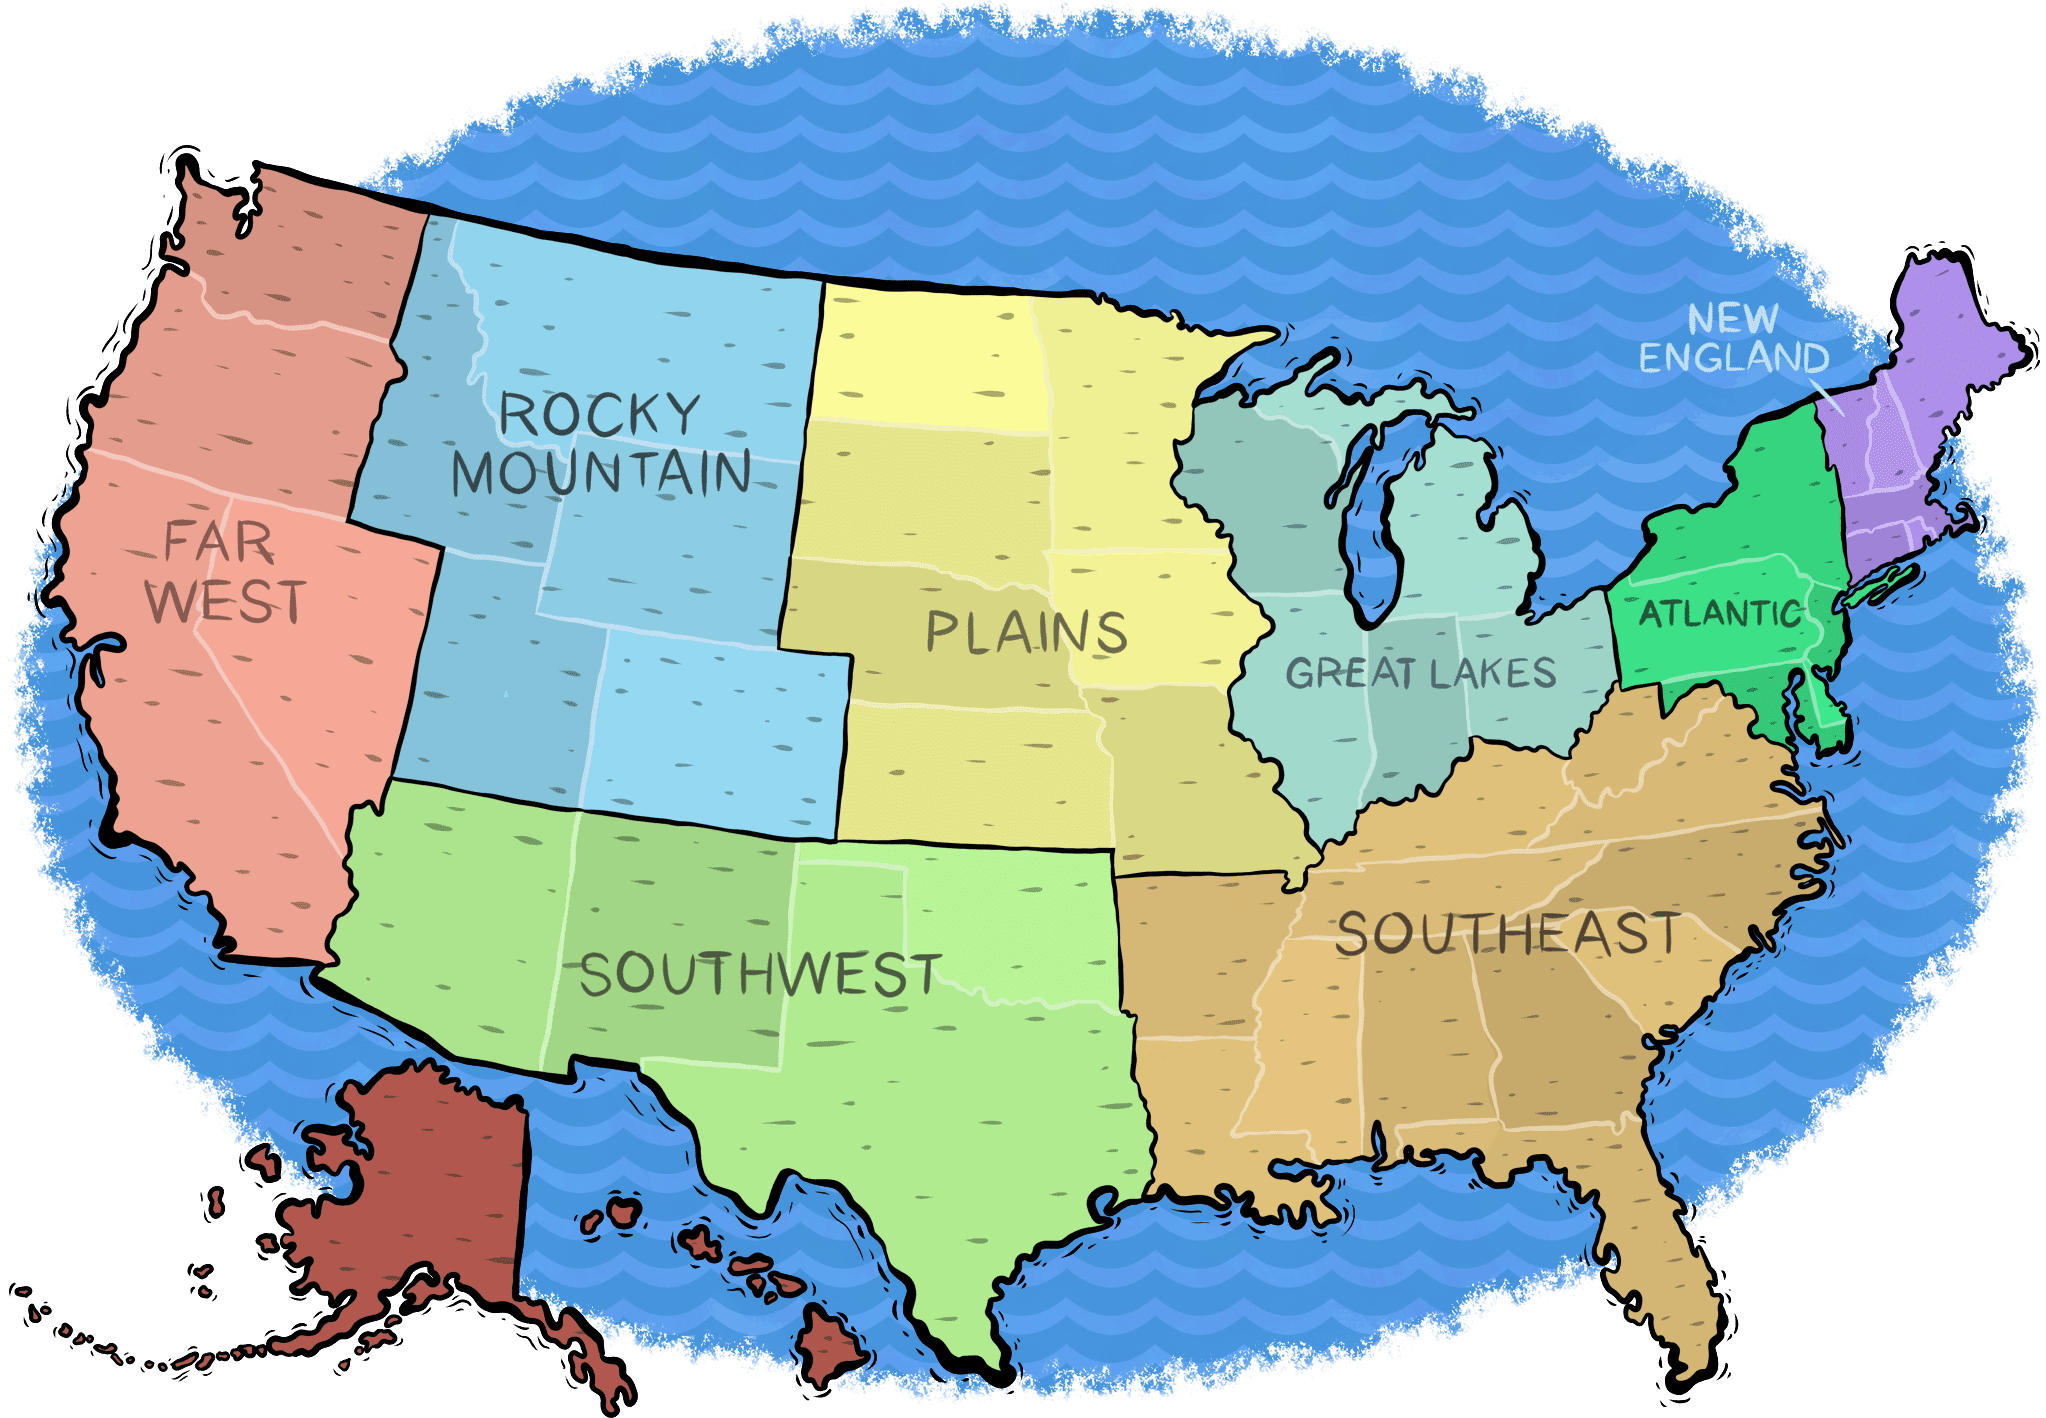 Far english. Us Map. United States Map. USA Map West. Дальний Запад США карта.